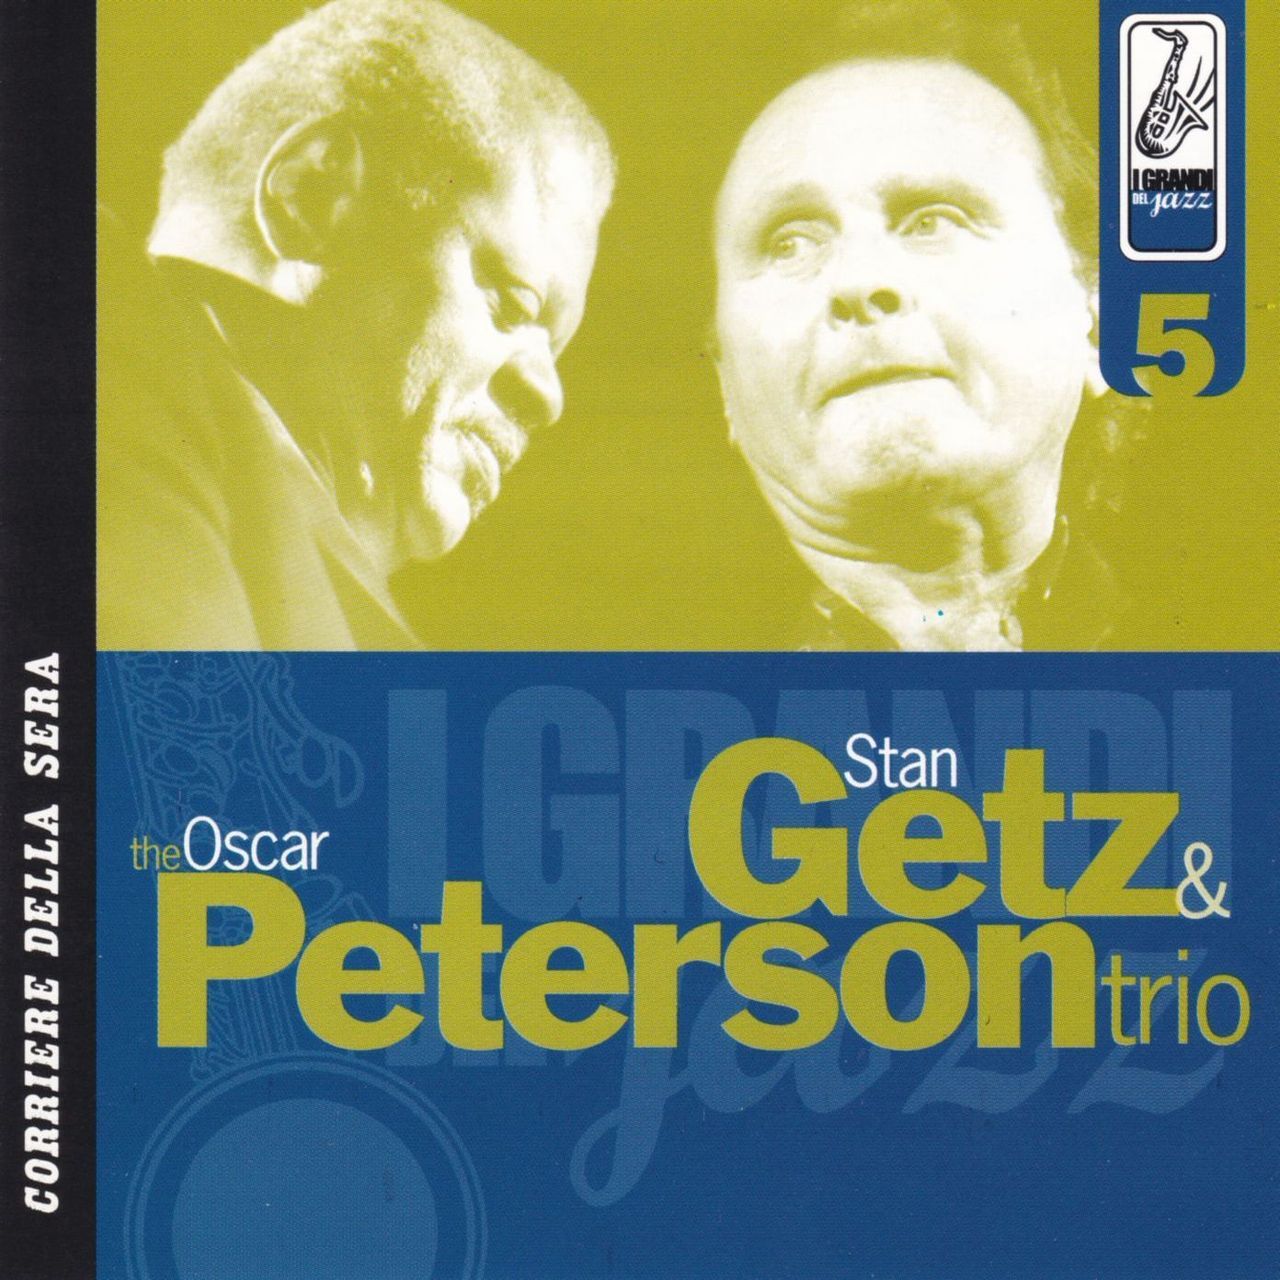 I Grandi Del Jazz - Stan Gets & The Oscar Peterson Trio album art